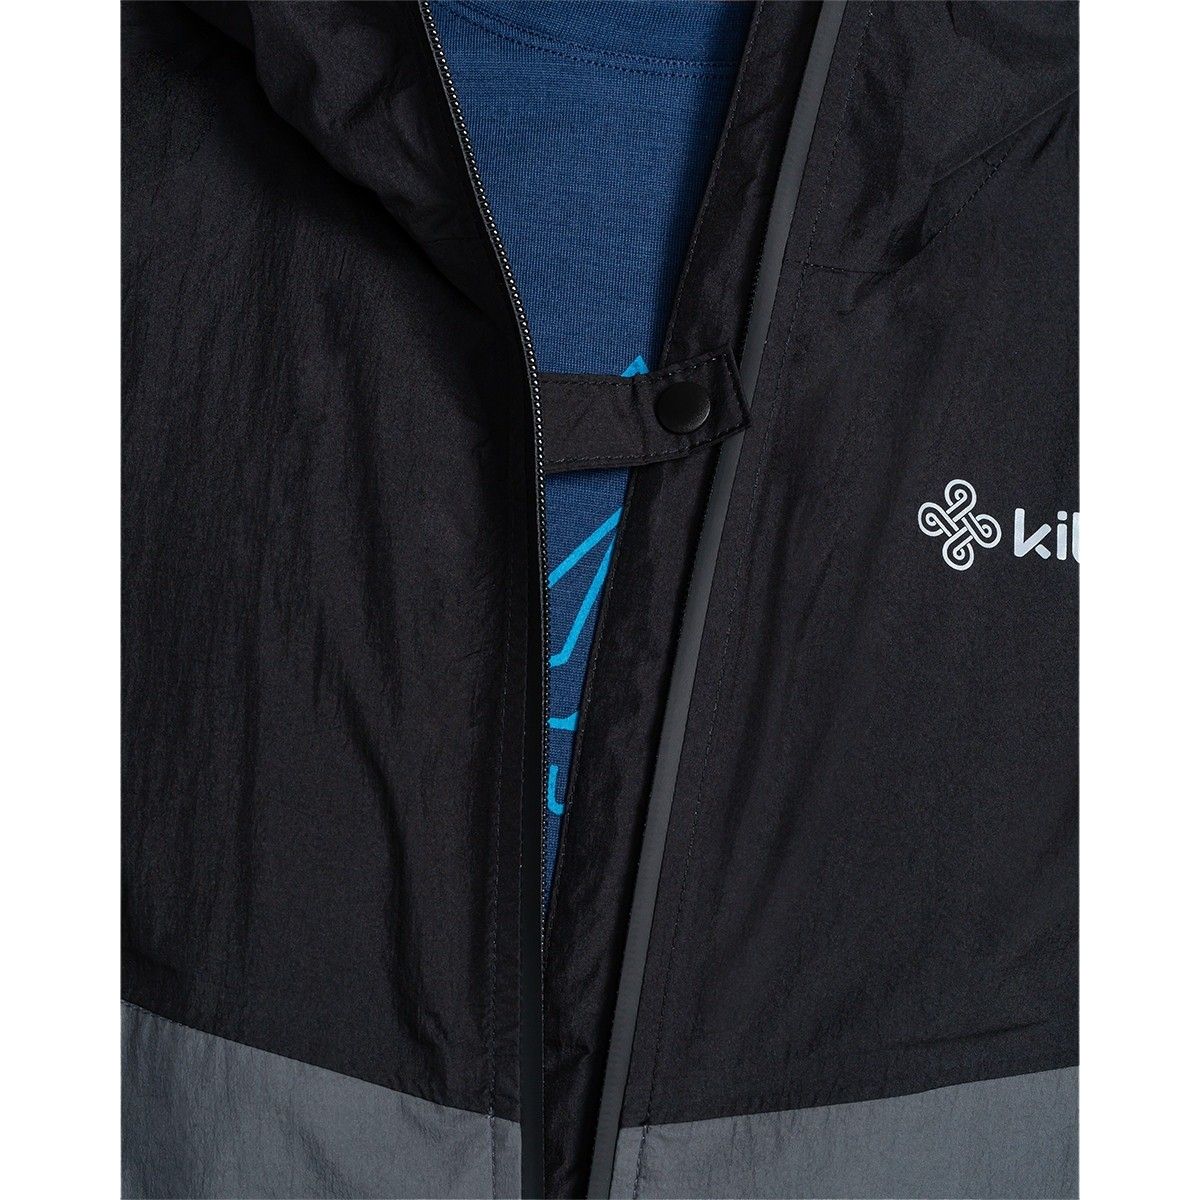 Kilpi Hurricane, rain jacket, men, black